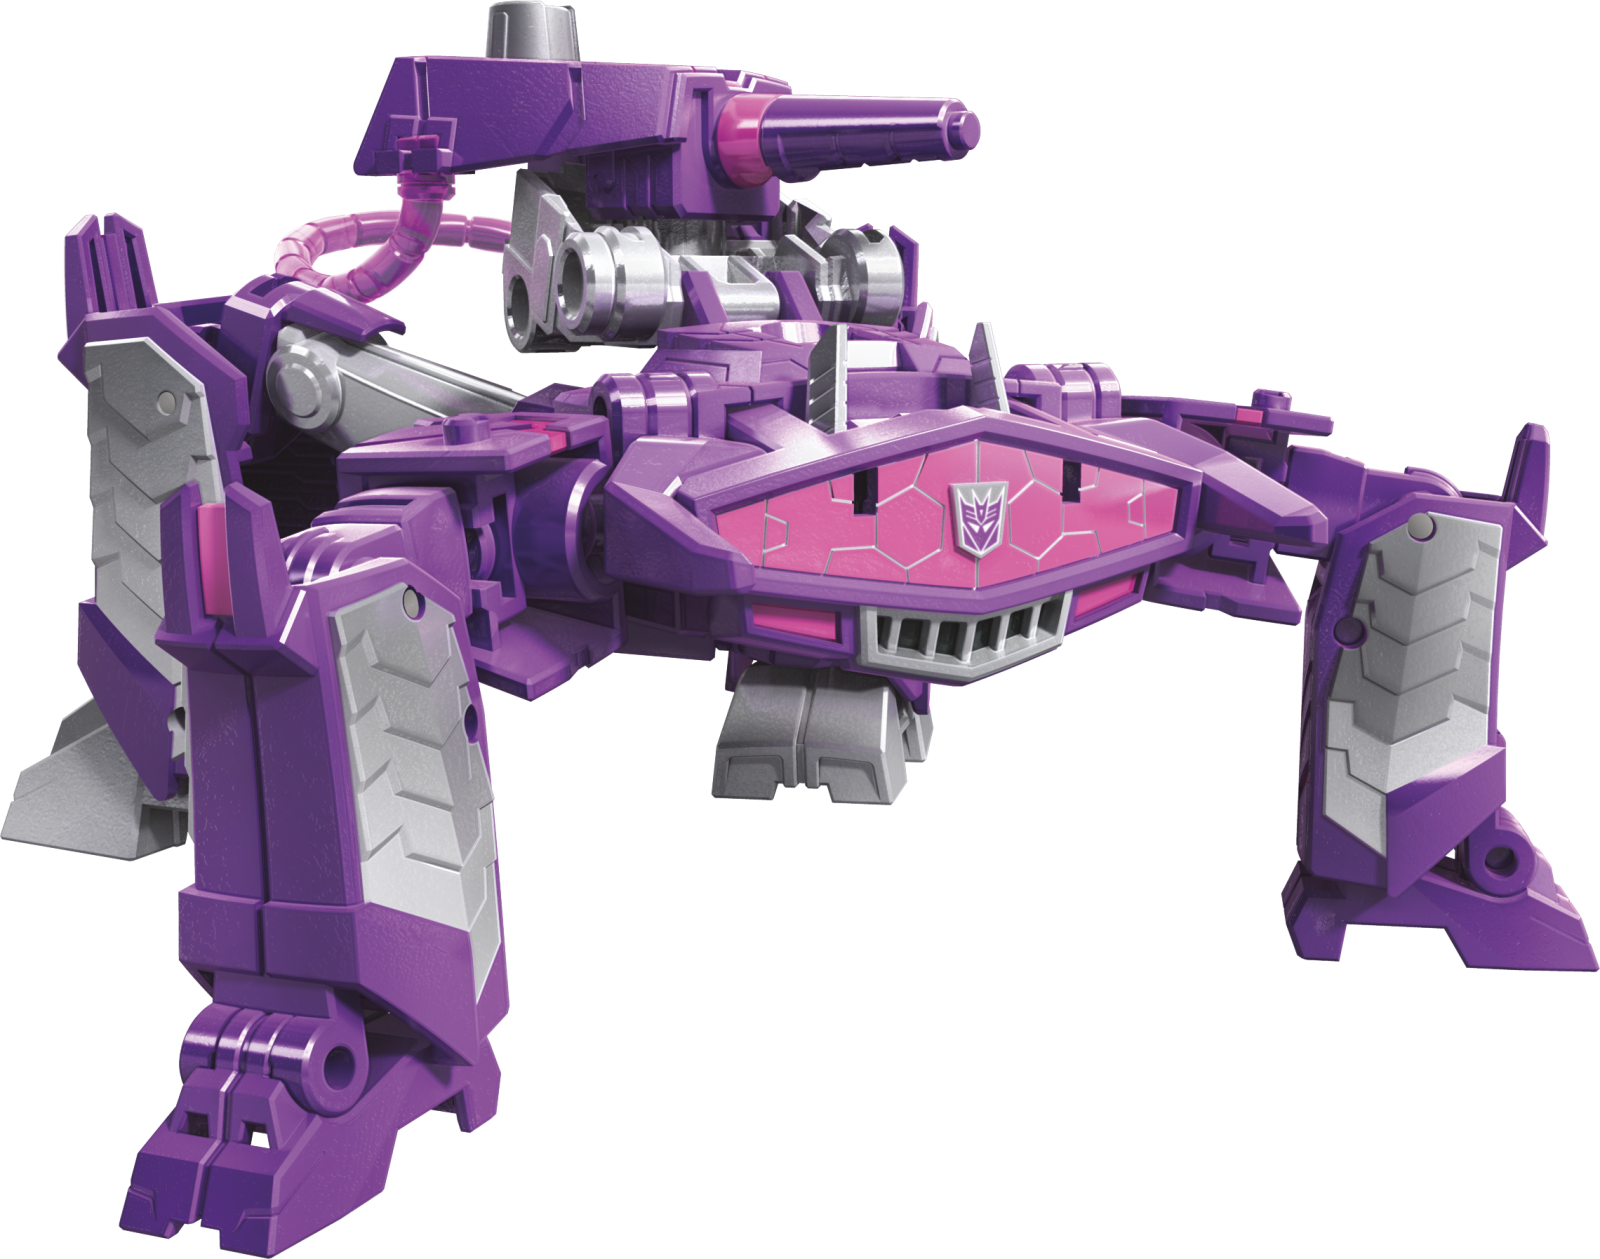 Transformers Cyberverse Shockwave. Transformers Cyberverse Deluxe. Transformers Cyberverse Шоквейв. Transformers Cyberverse Deluxe class.